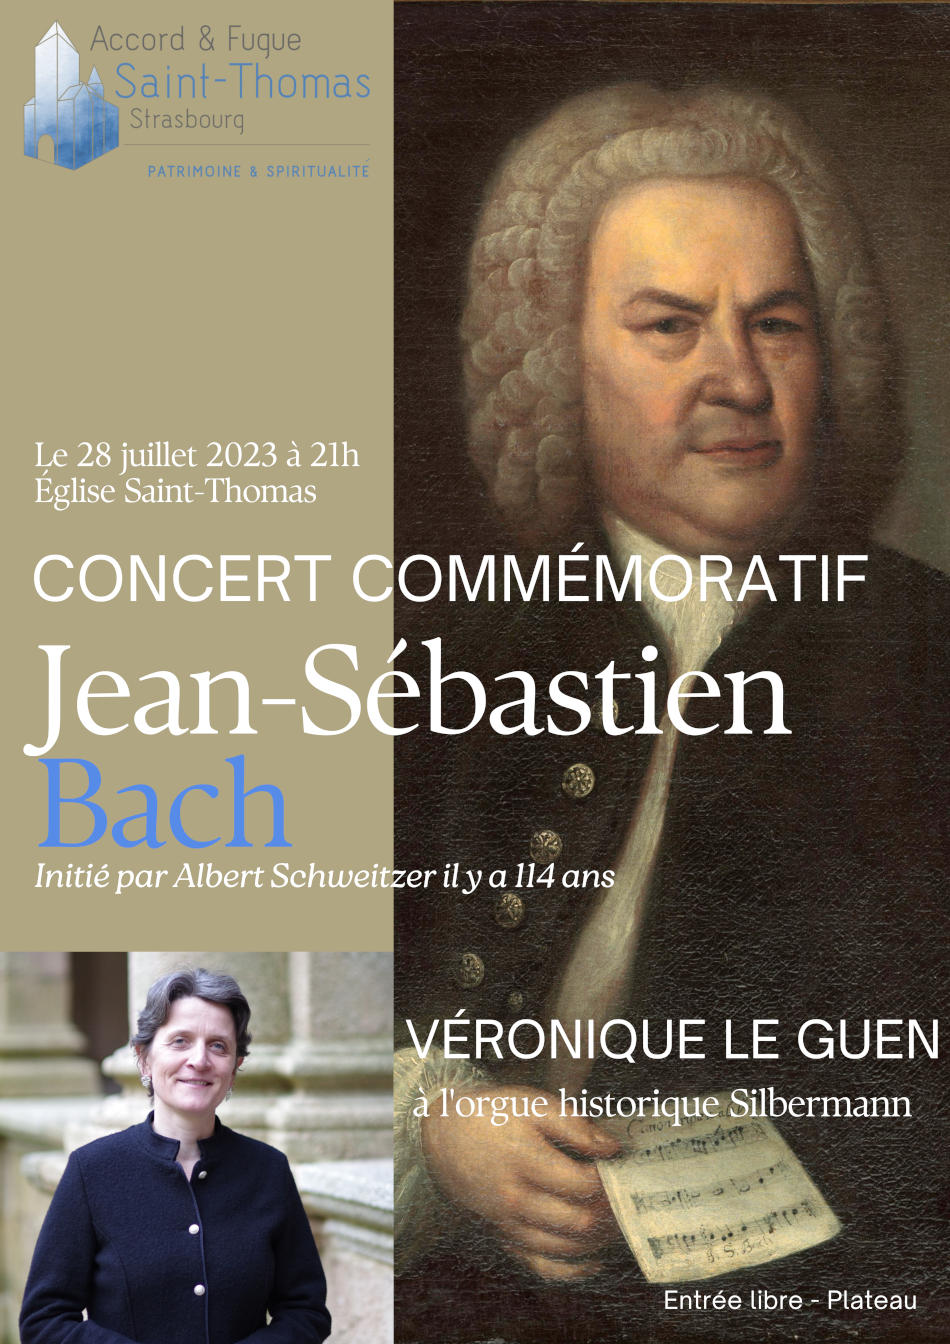 Concert Bach Strasbourg